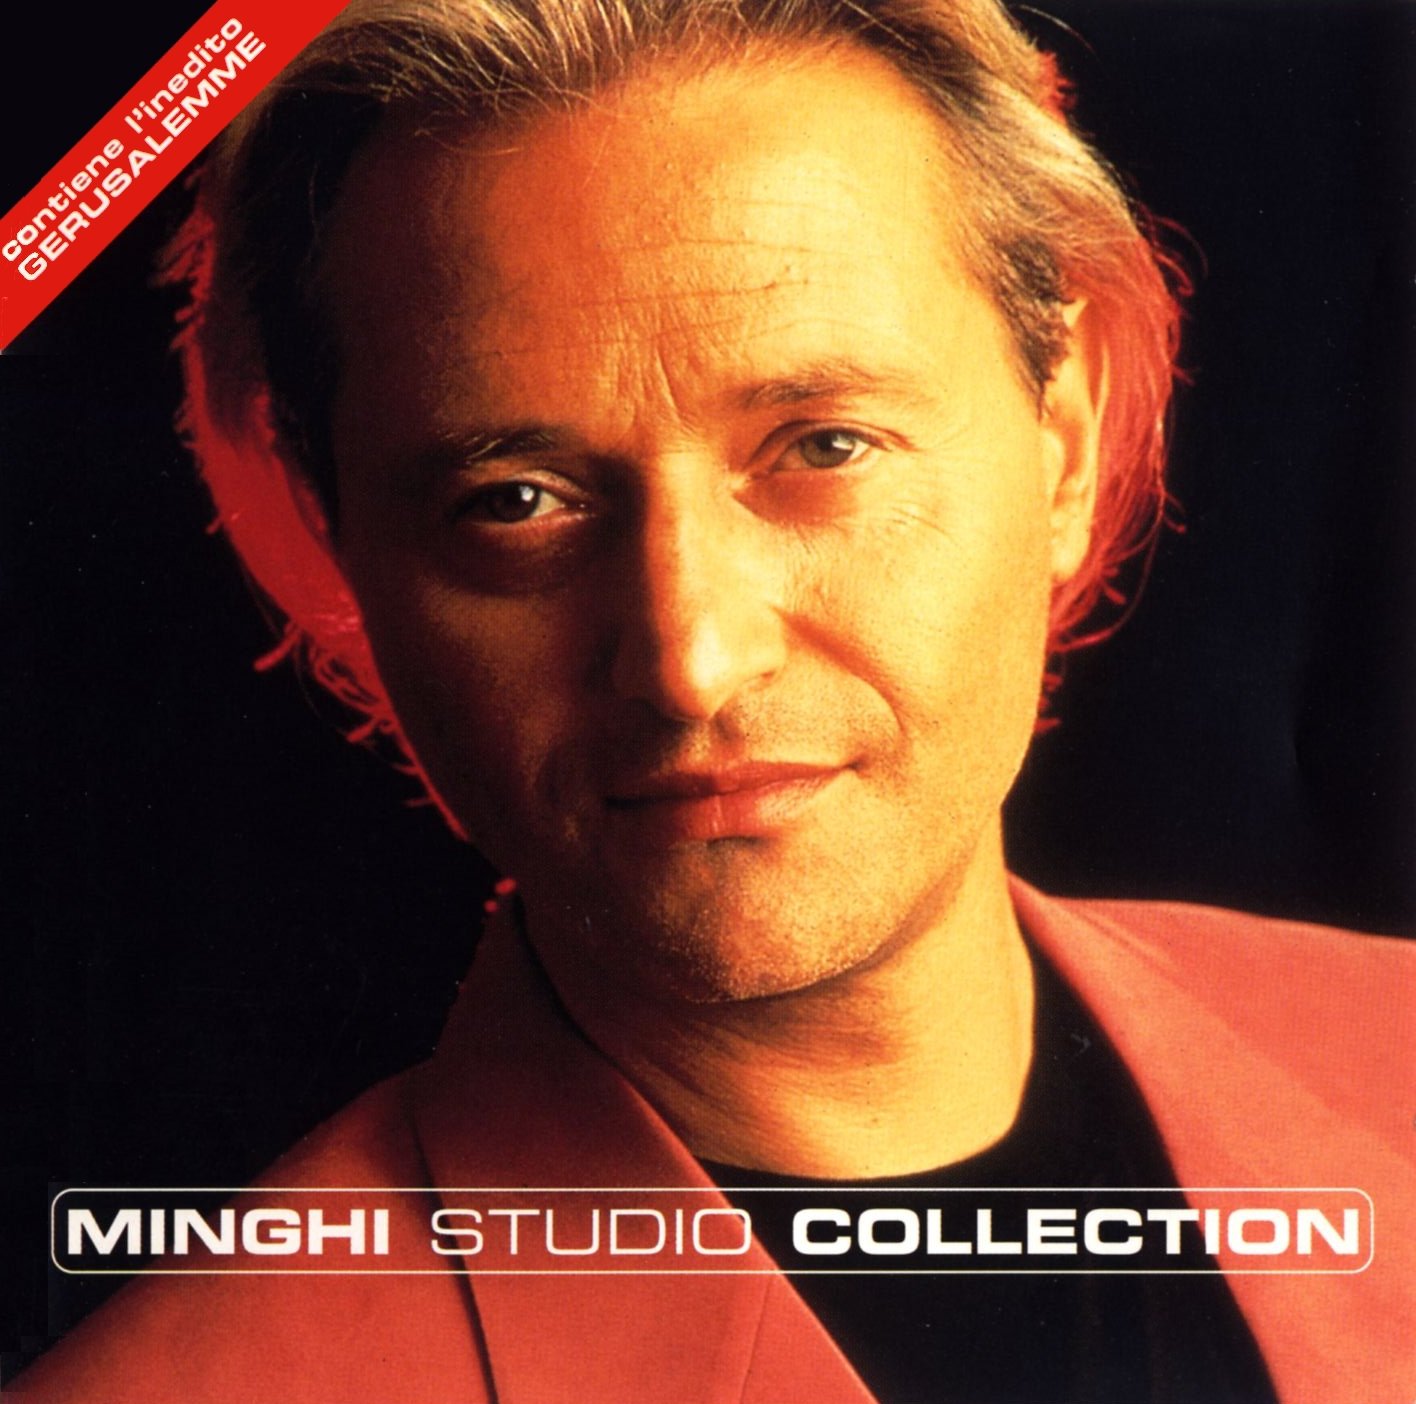 Minghi Studio Collection — Amedeo Minghi | Last.fm